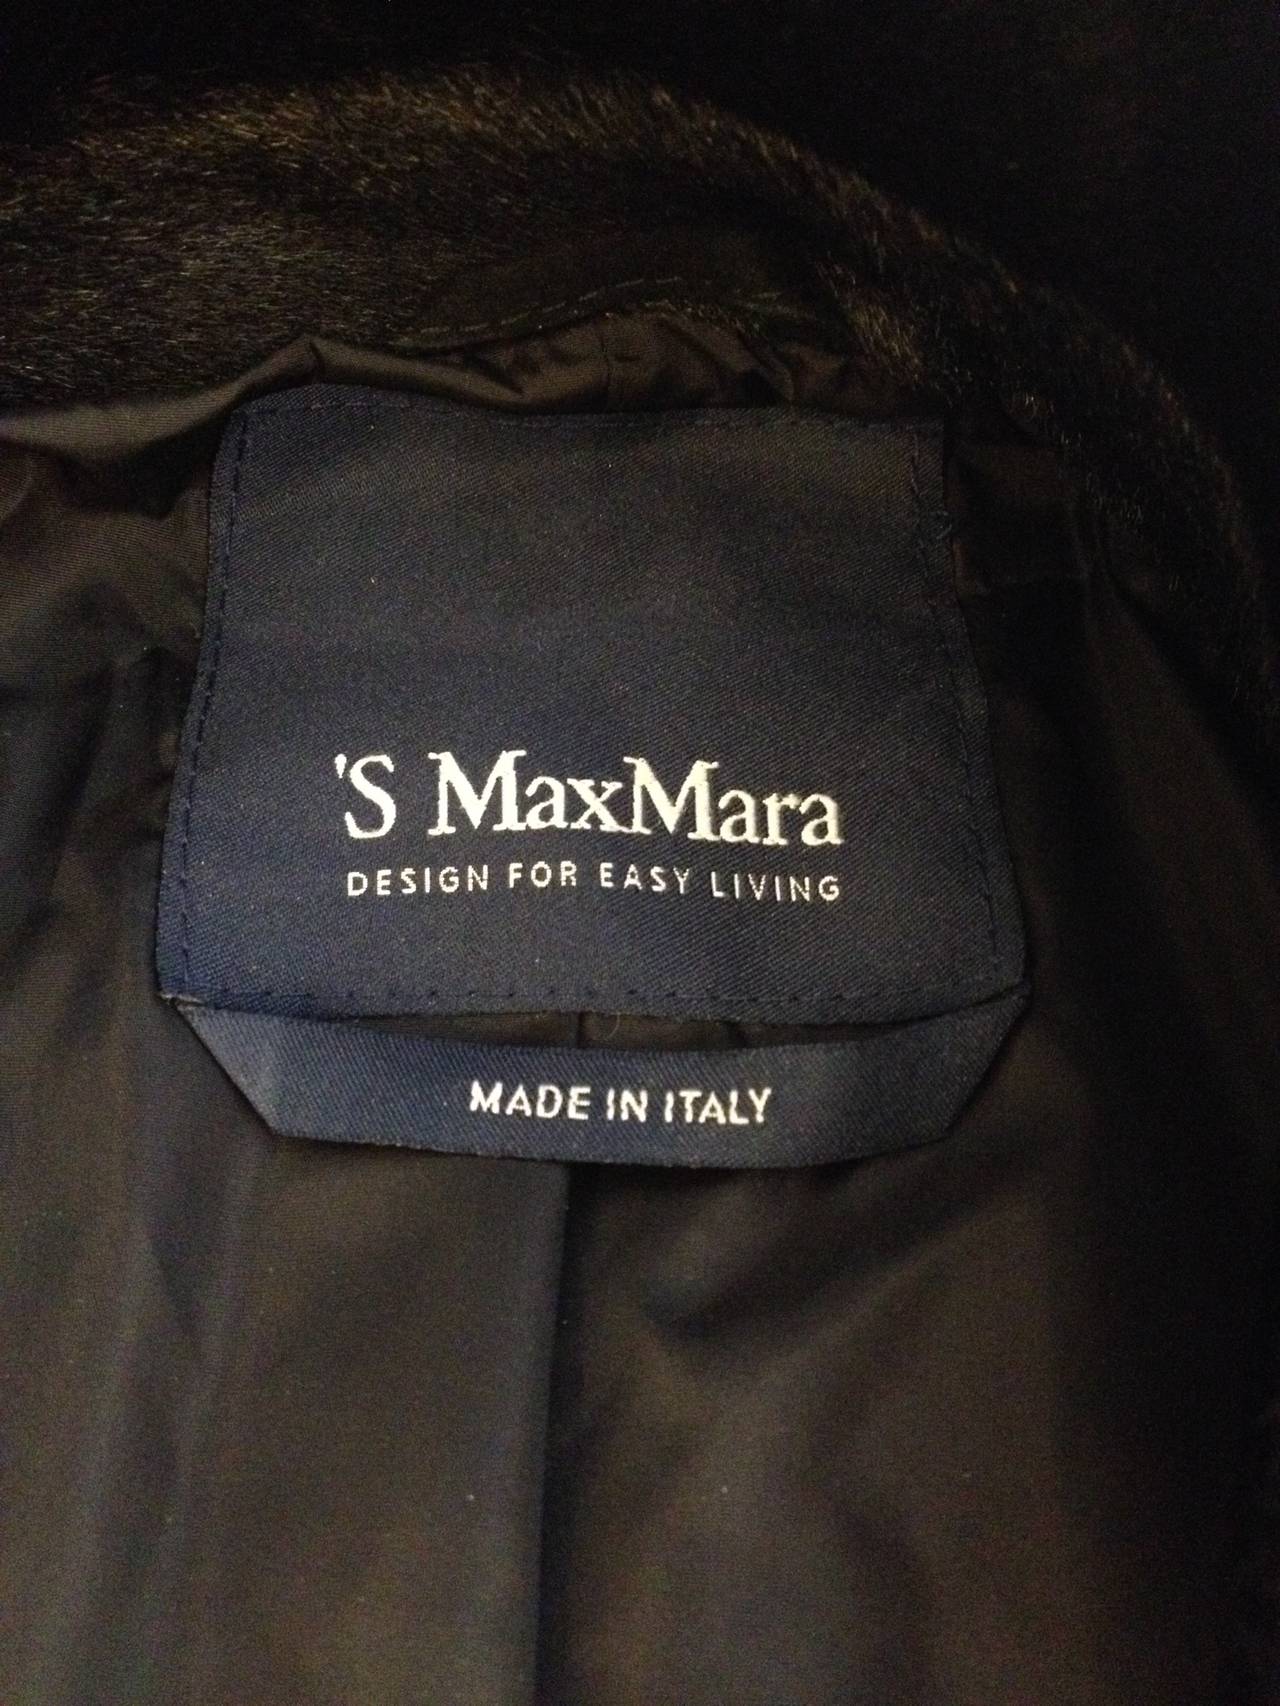 Max Mara Sport Black Ponyhair Coat For Sale at 1stdibs